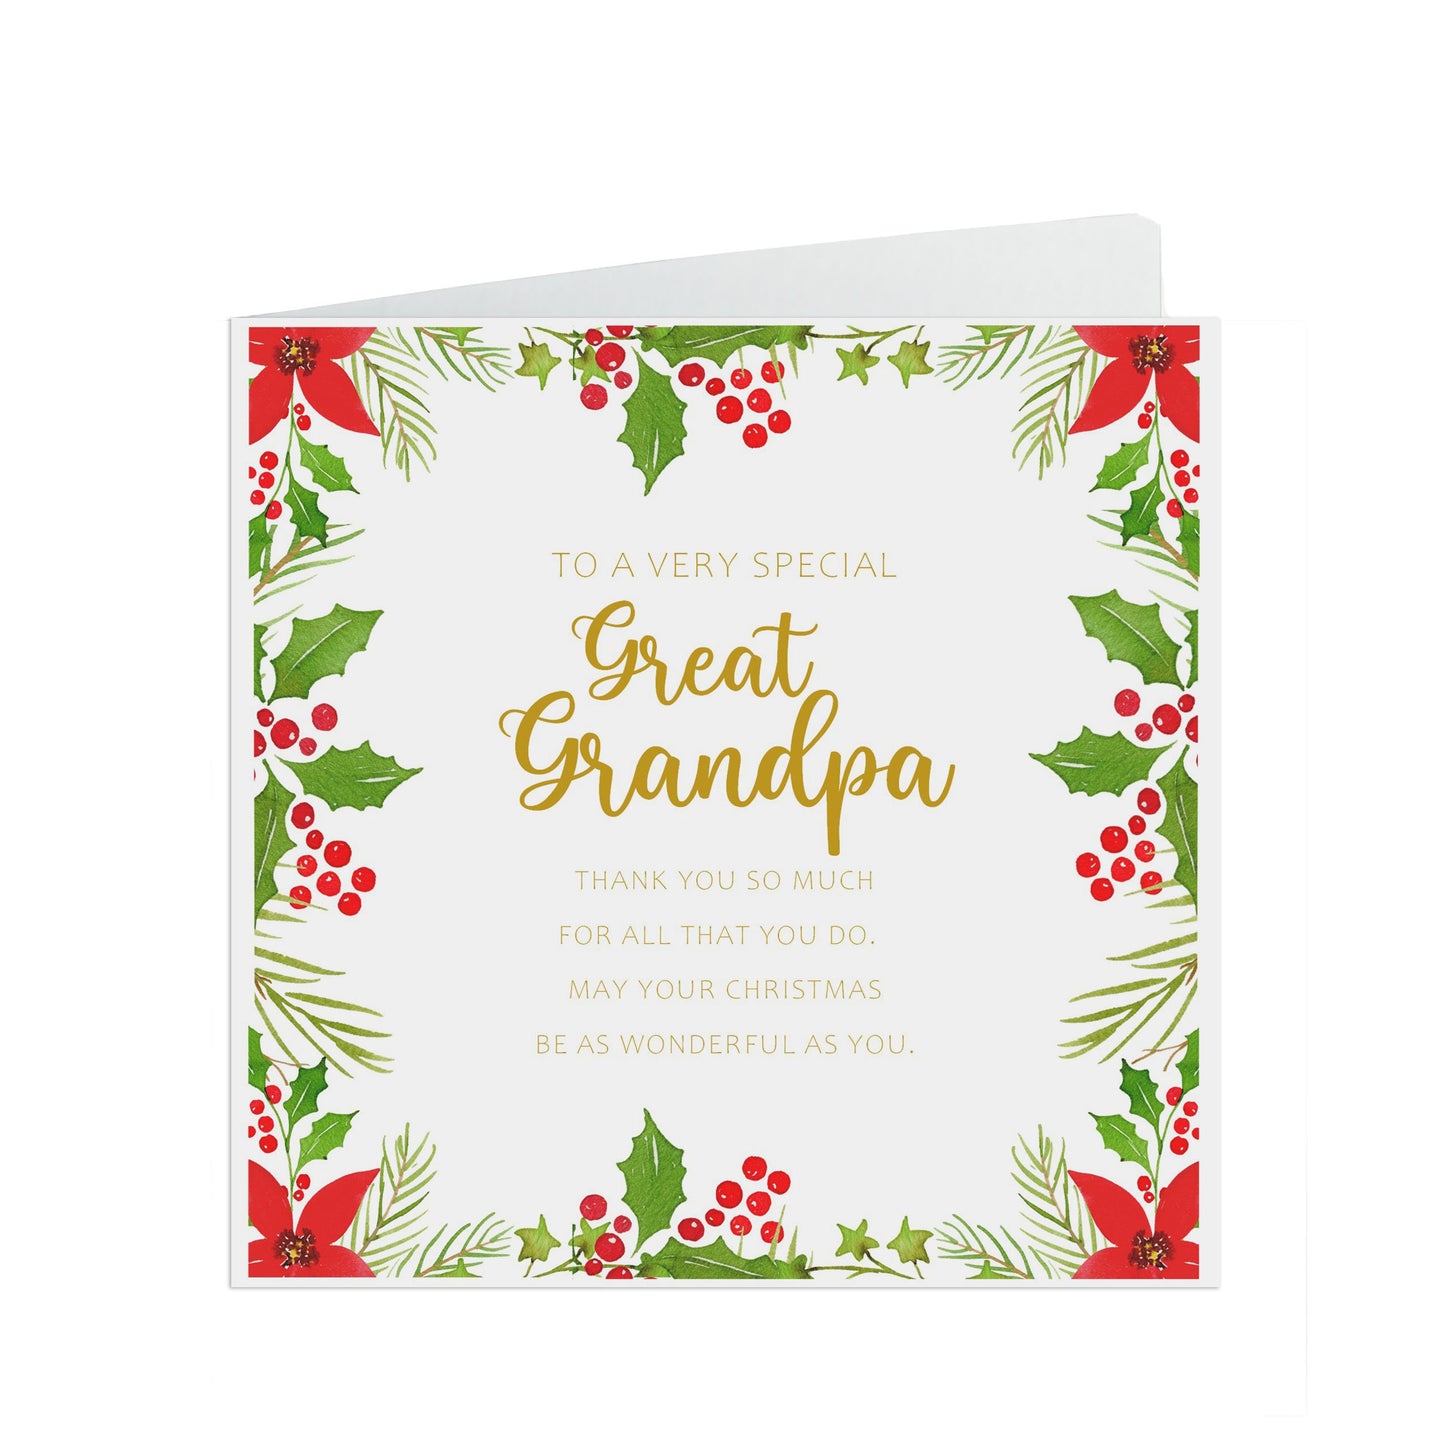 Great Grandpa Christmas Card, Traditional Poinsettia Design